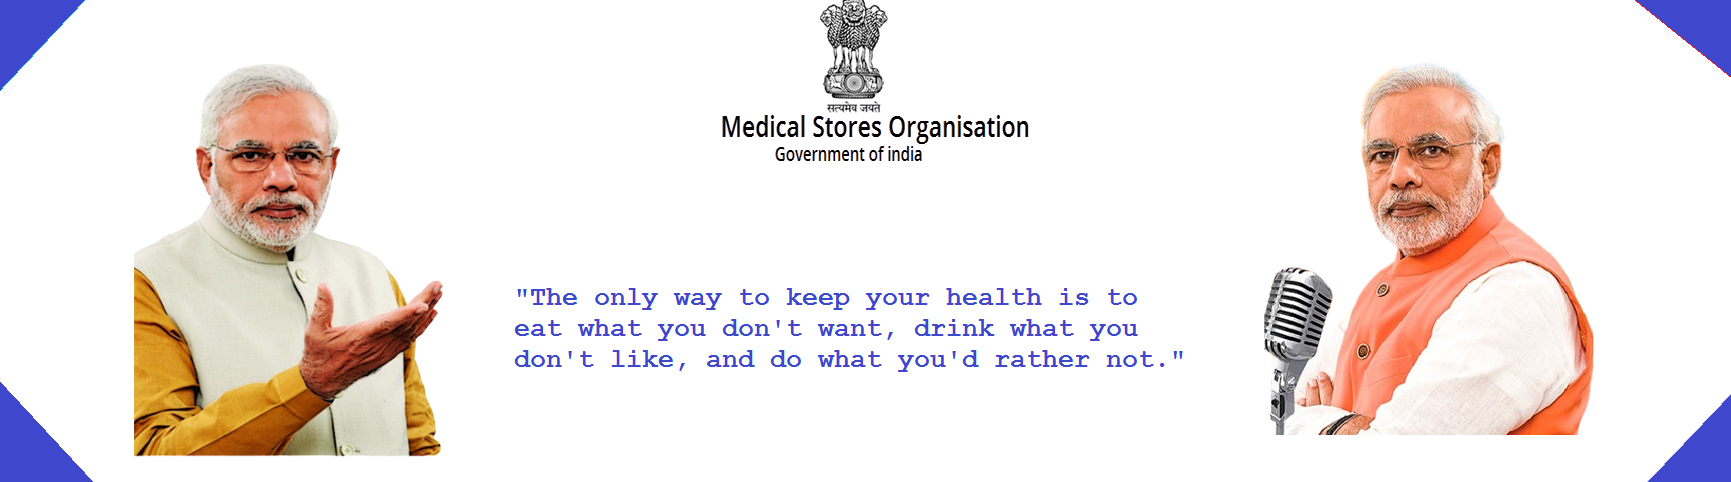 Medical Stores Organisation